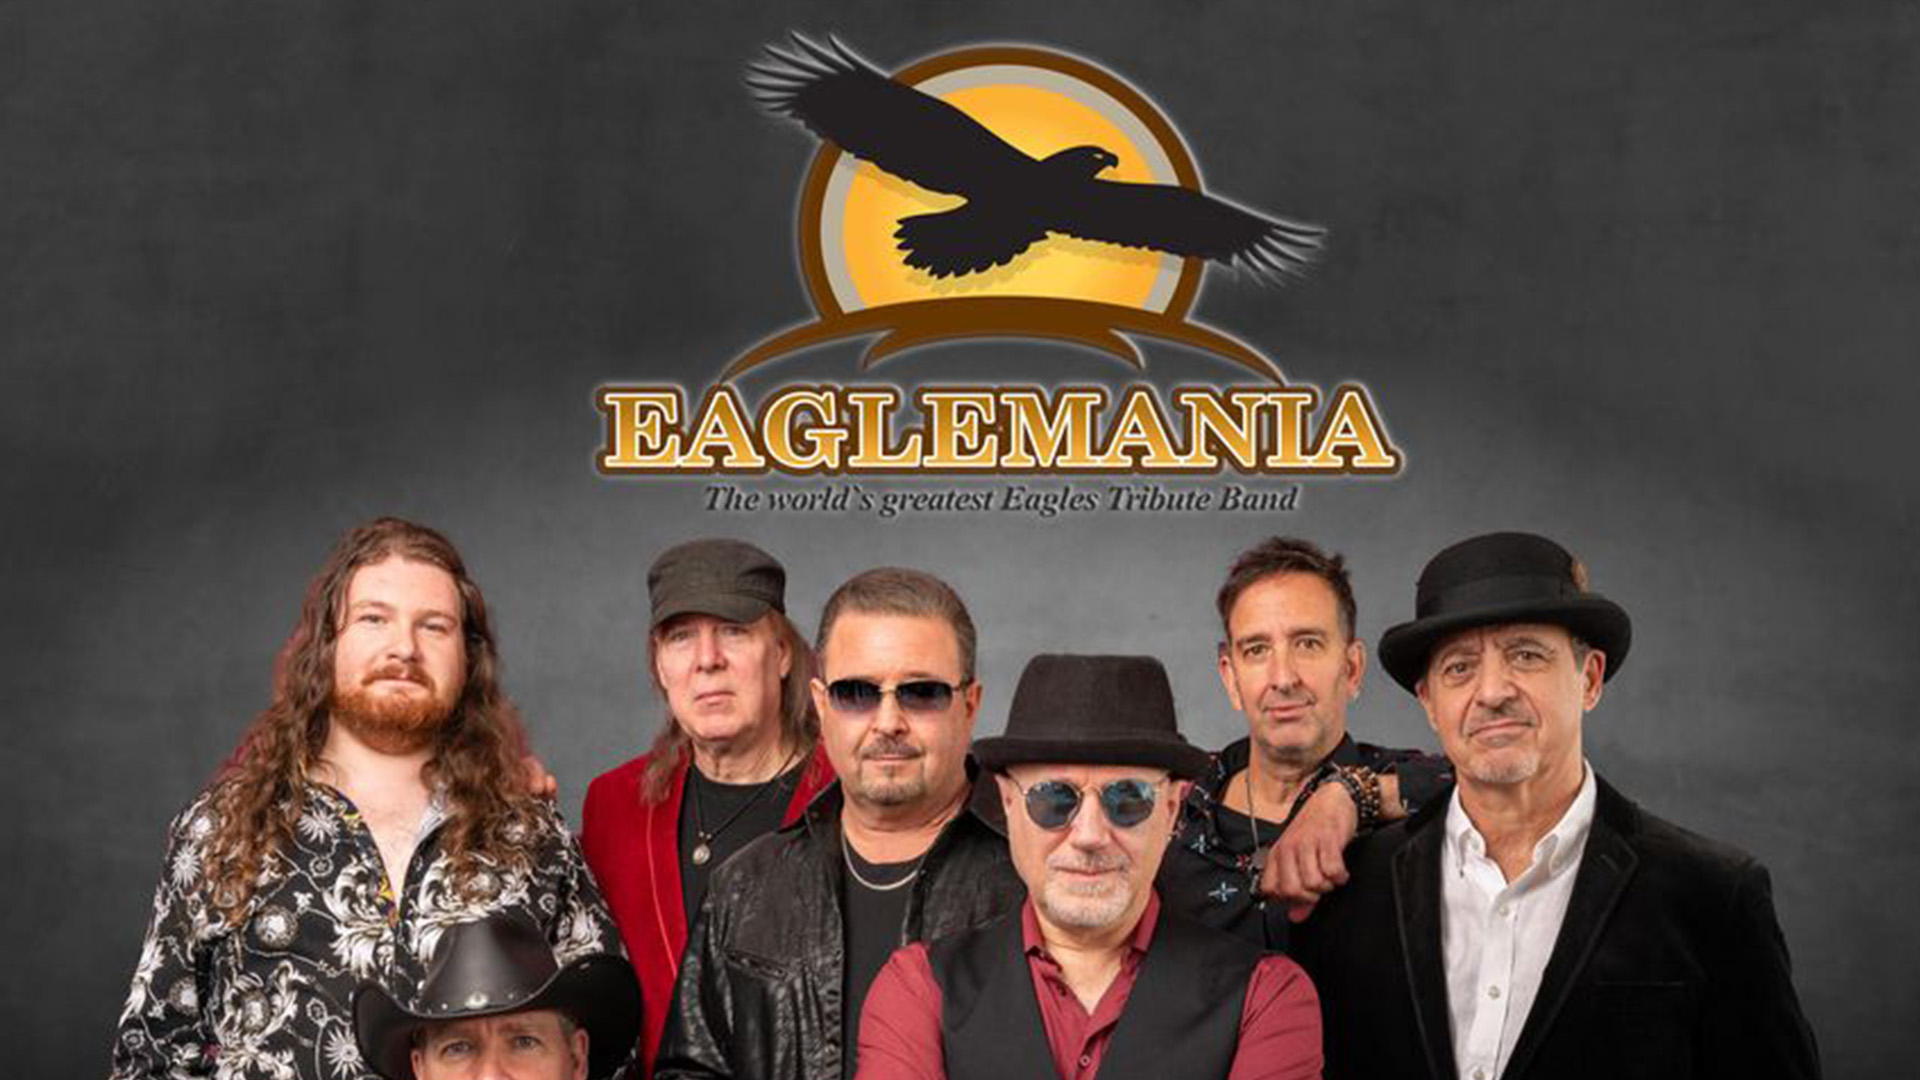 Eaglemania: The World's Greatest Eagles Tribute